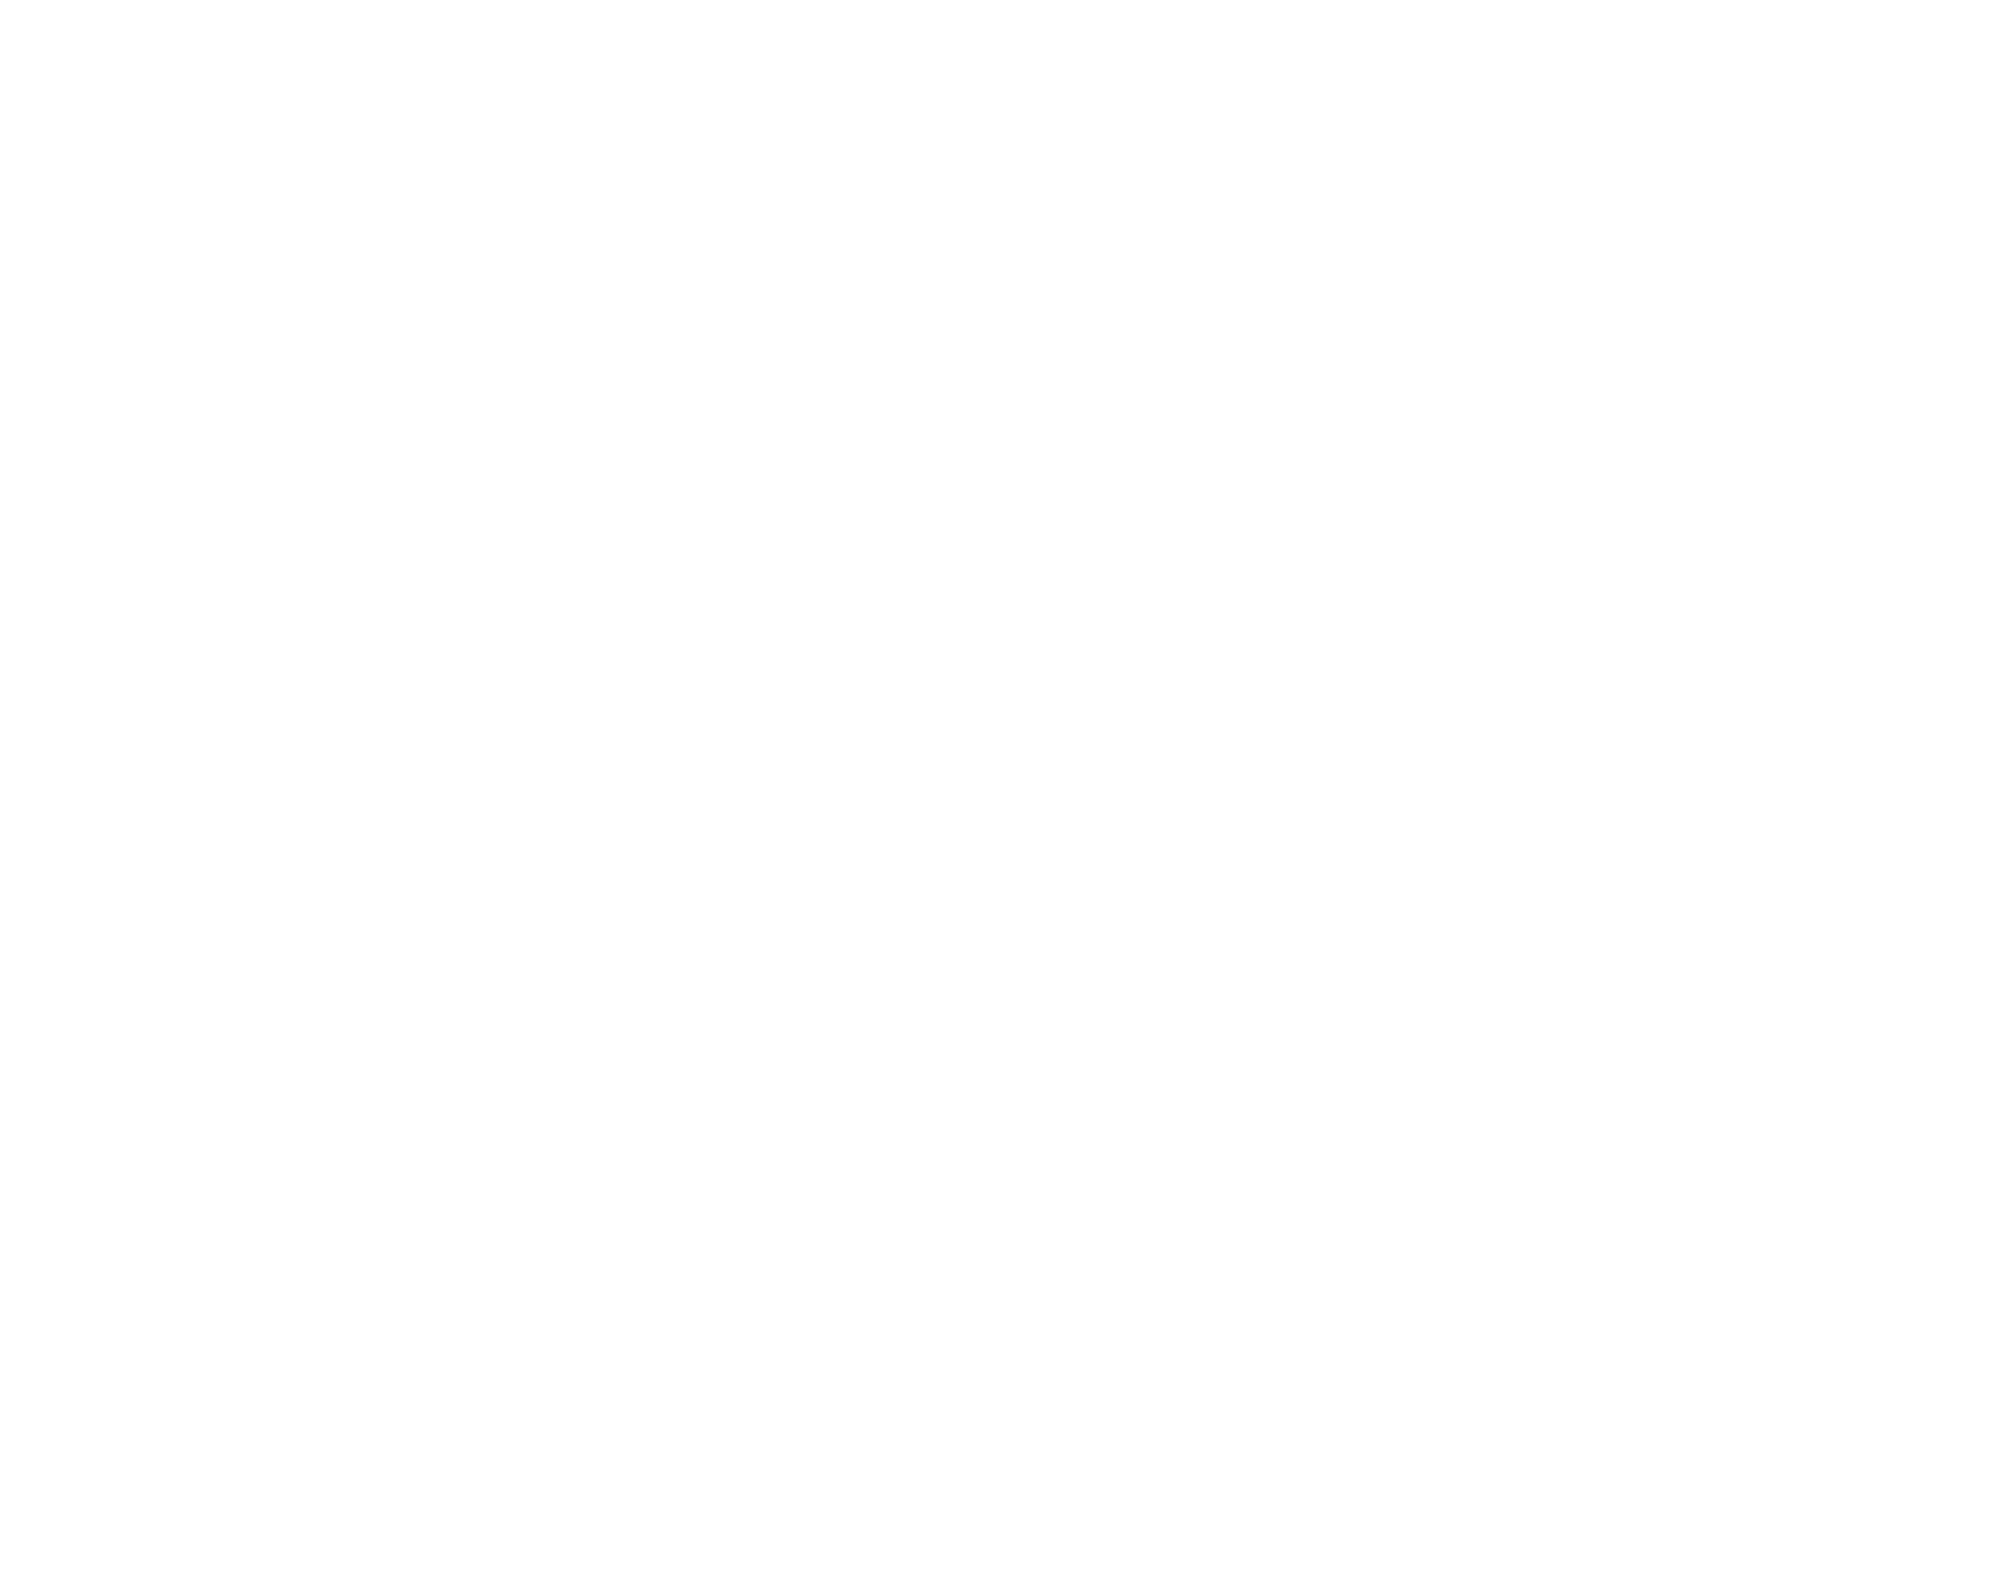 specialiste du sommeil Linda Amine2